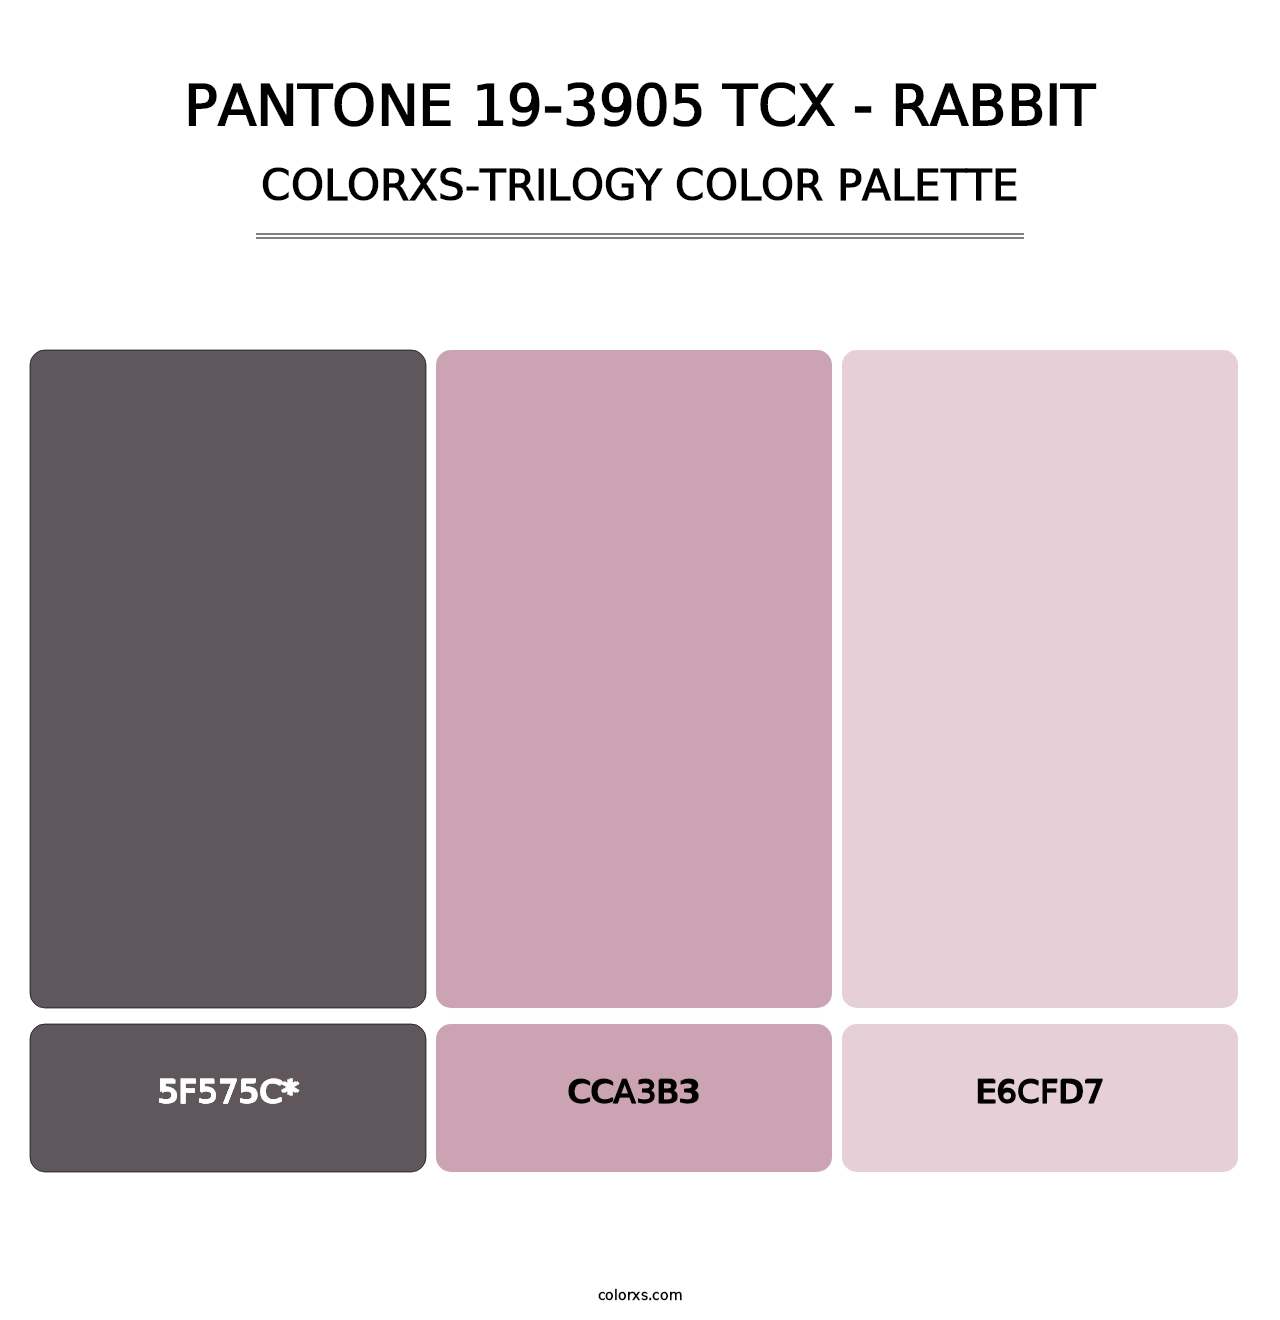 PANTONE 19-3905 TCX - Rabbit - Colorxs Trilogy Palette